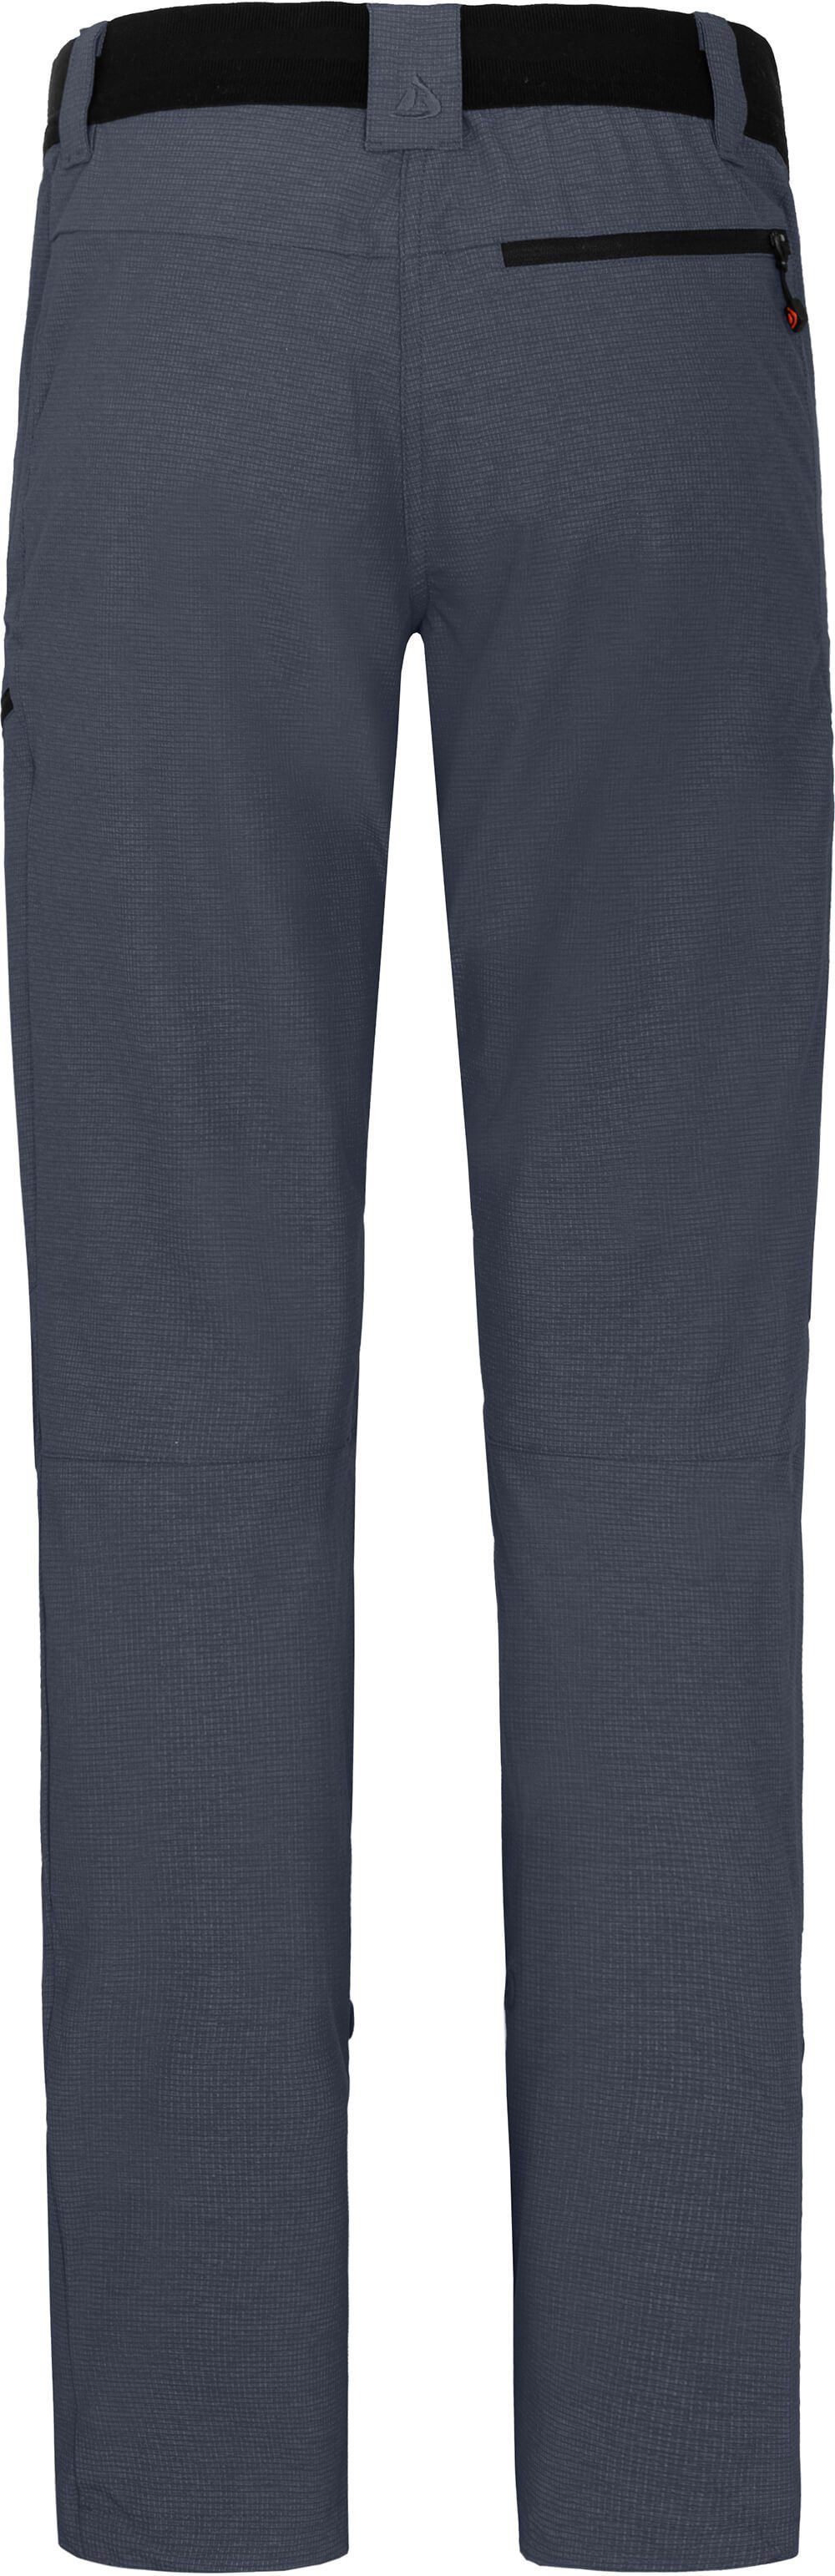 Bergson Outdoorhose PORI Damen elastisch, Wanderhose, Normalgrößen, grau/blau robust